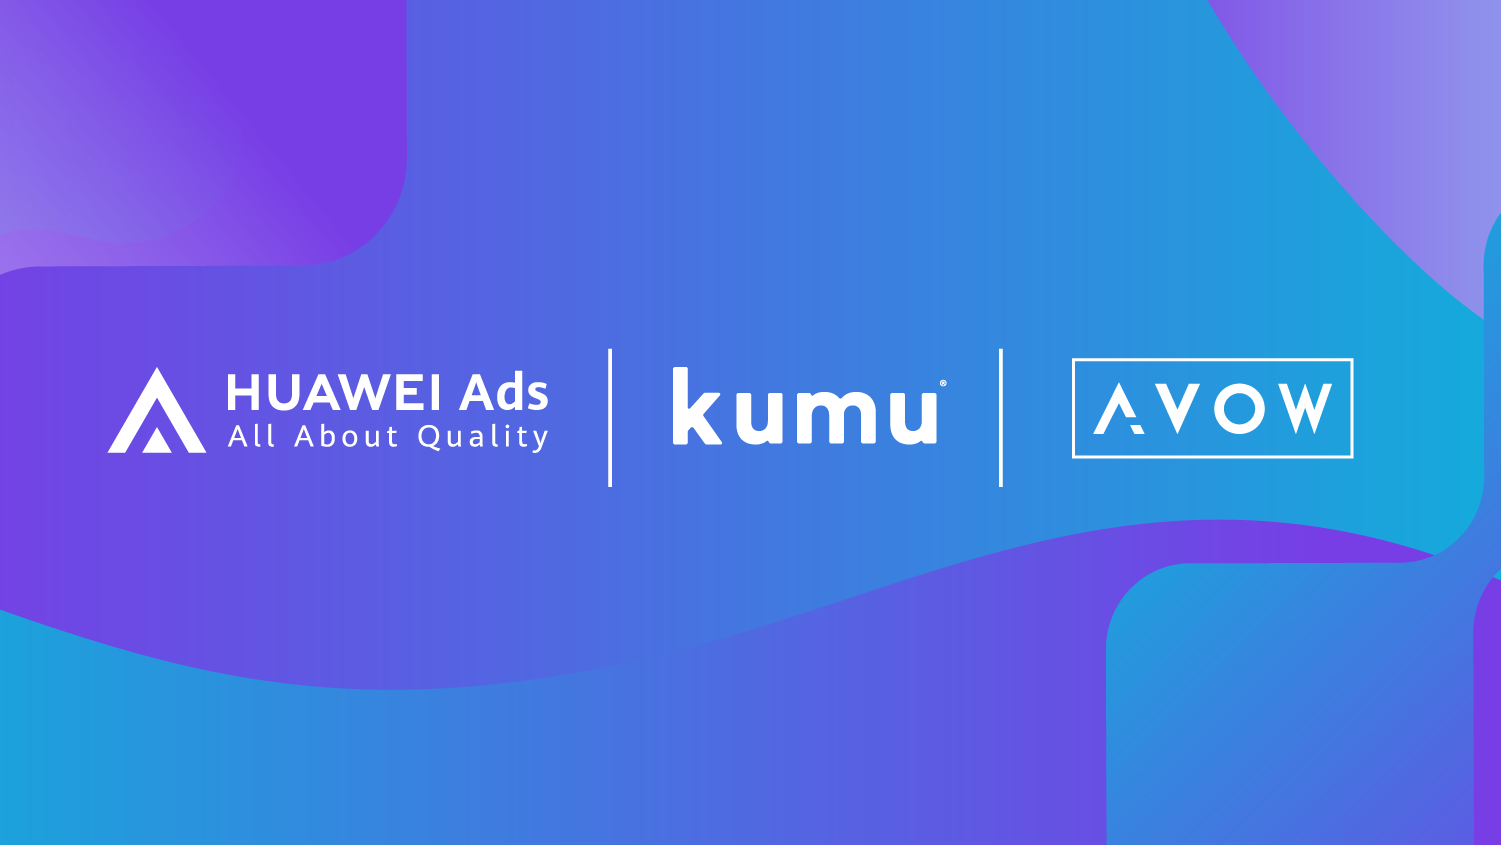 Kumu + AVOW: Selecting HUAWEI Ads as a Long-term Growth Partner 